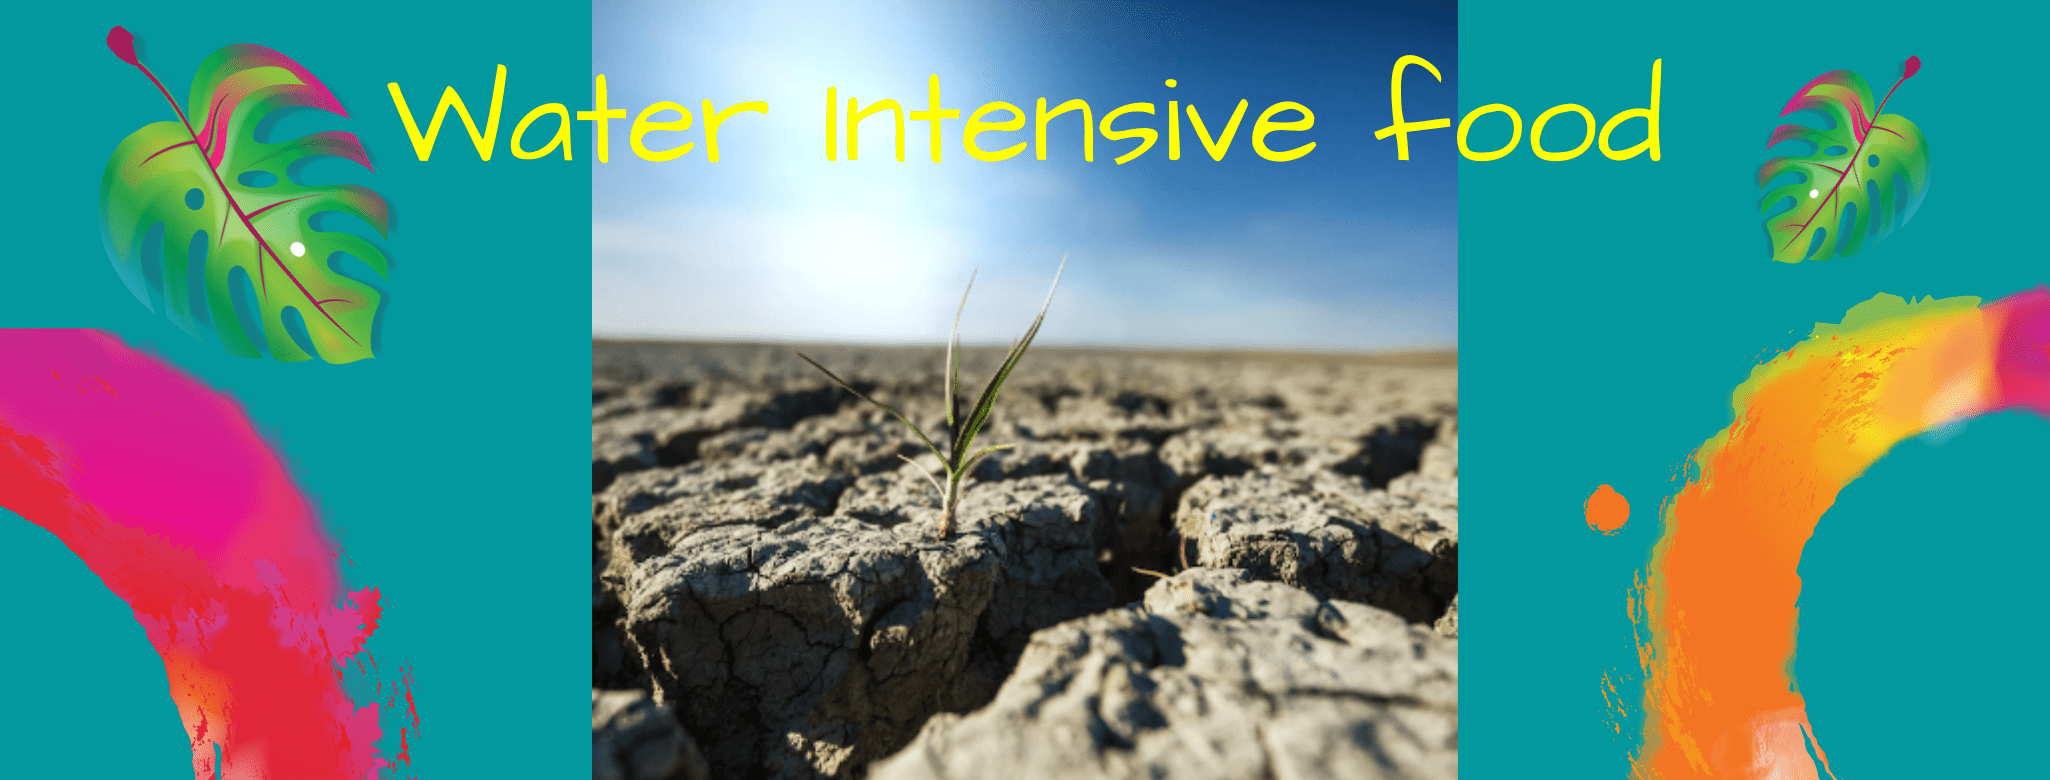 water intensive food blog